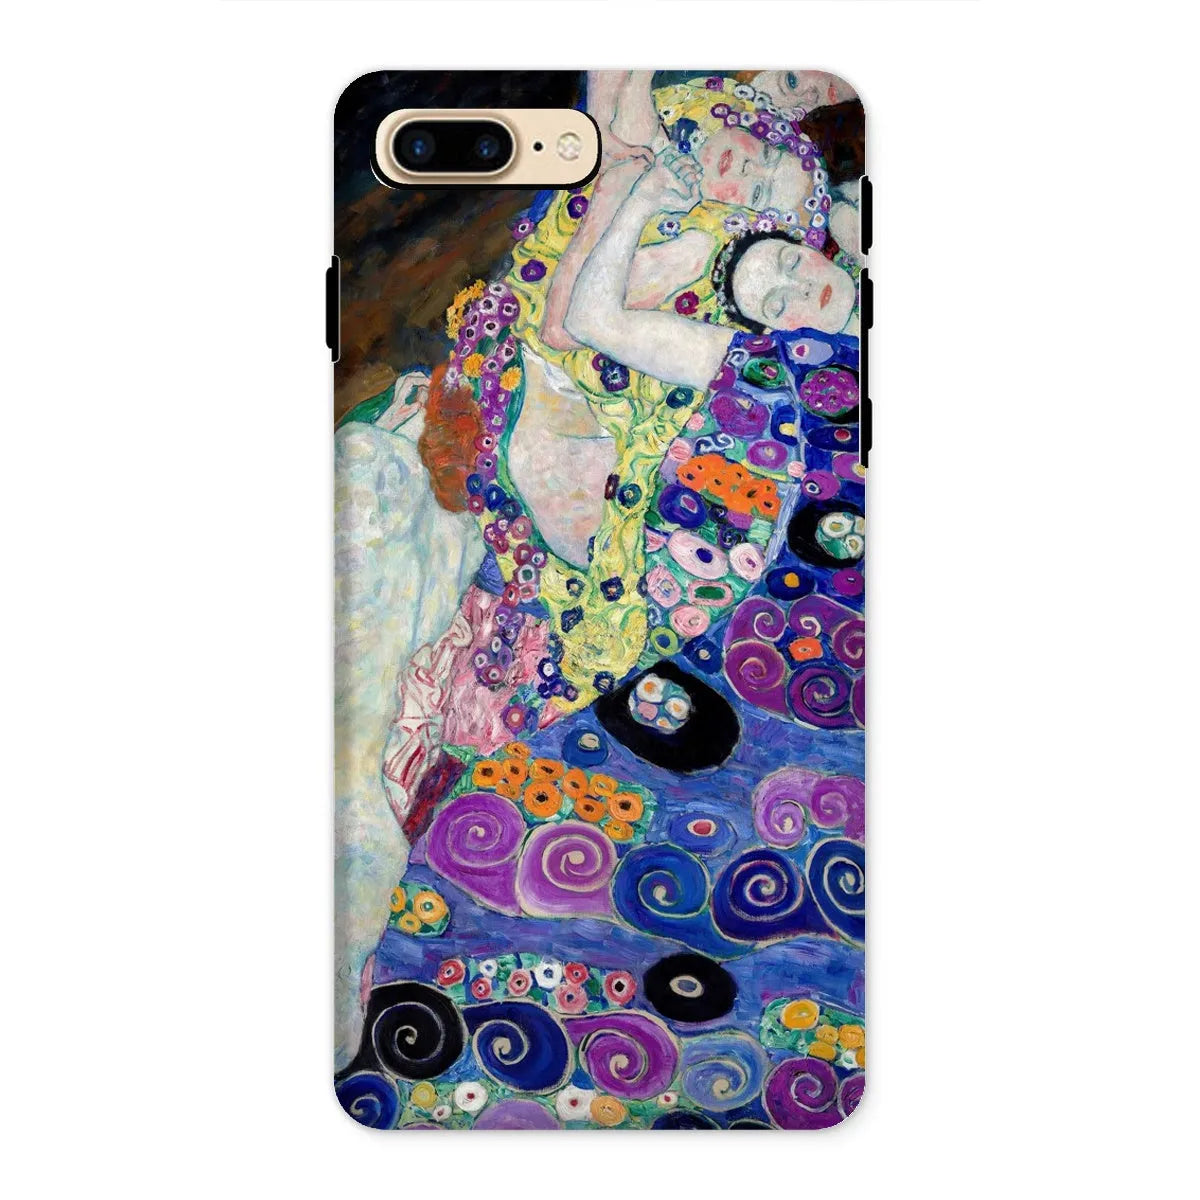 The Virgin - Vienna Secession Phone Case - Gustav Klimt - Iphone 8 Plus / Matte - Mobile Phone Cases - Aesthetic Art